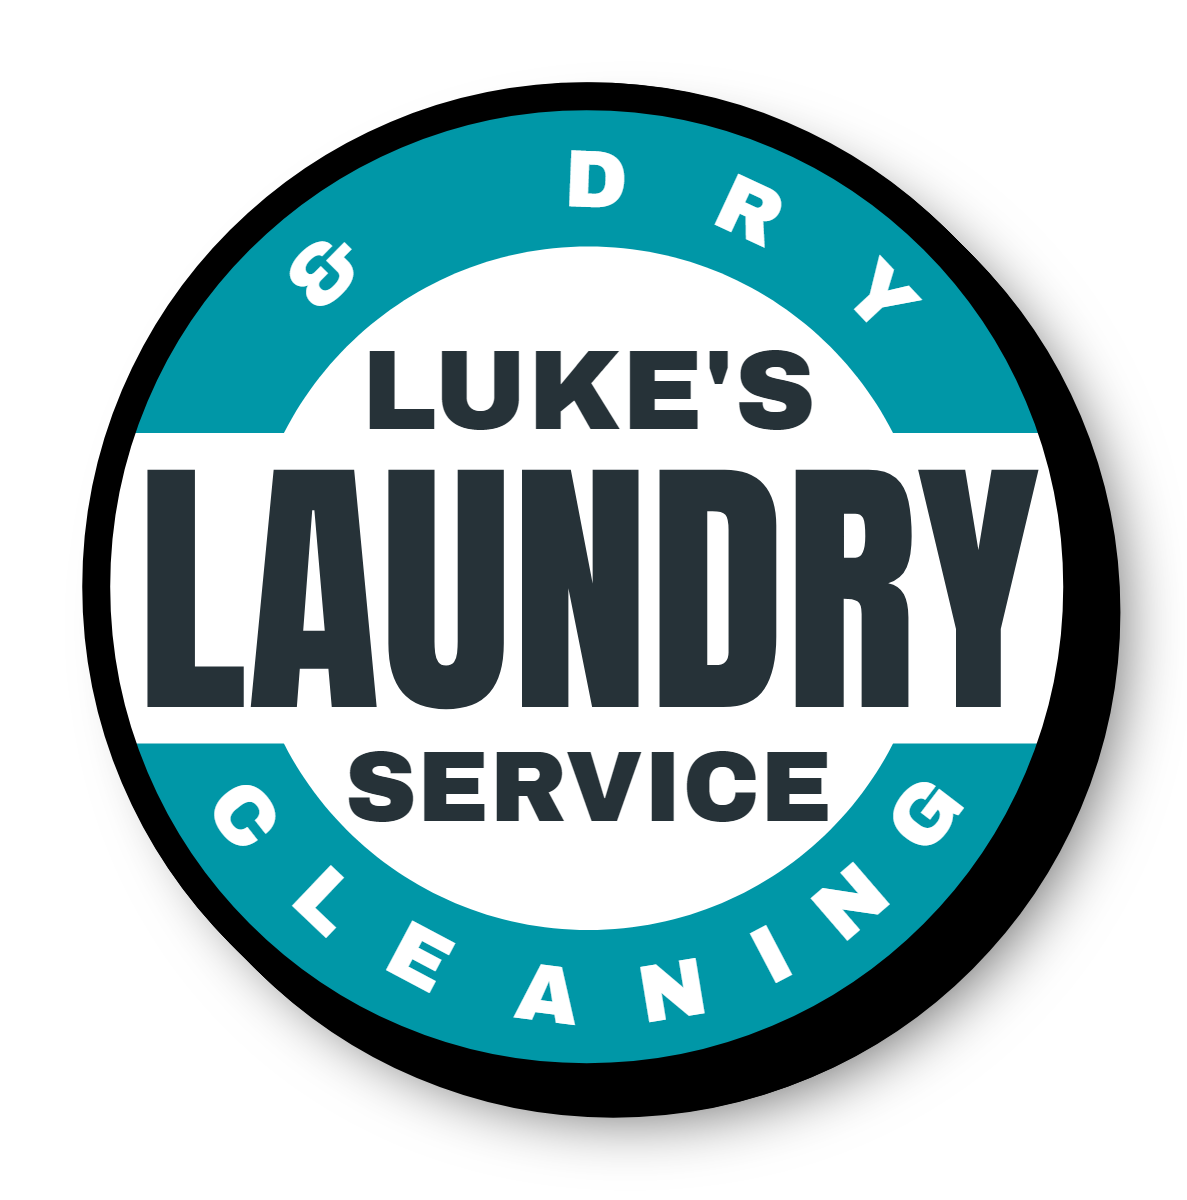 Luke's Laundry Service Single Face Lit Shaped Cabinet Sign